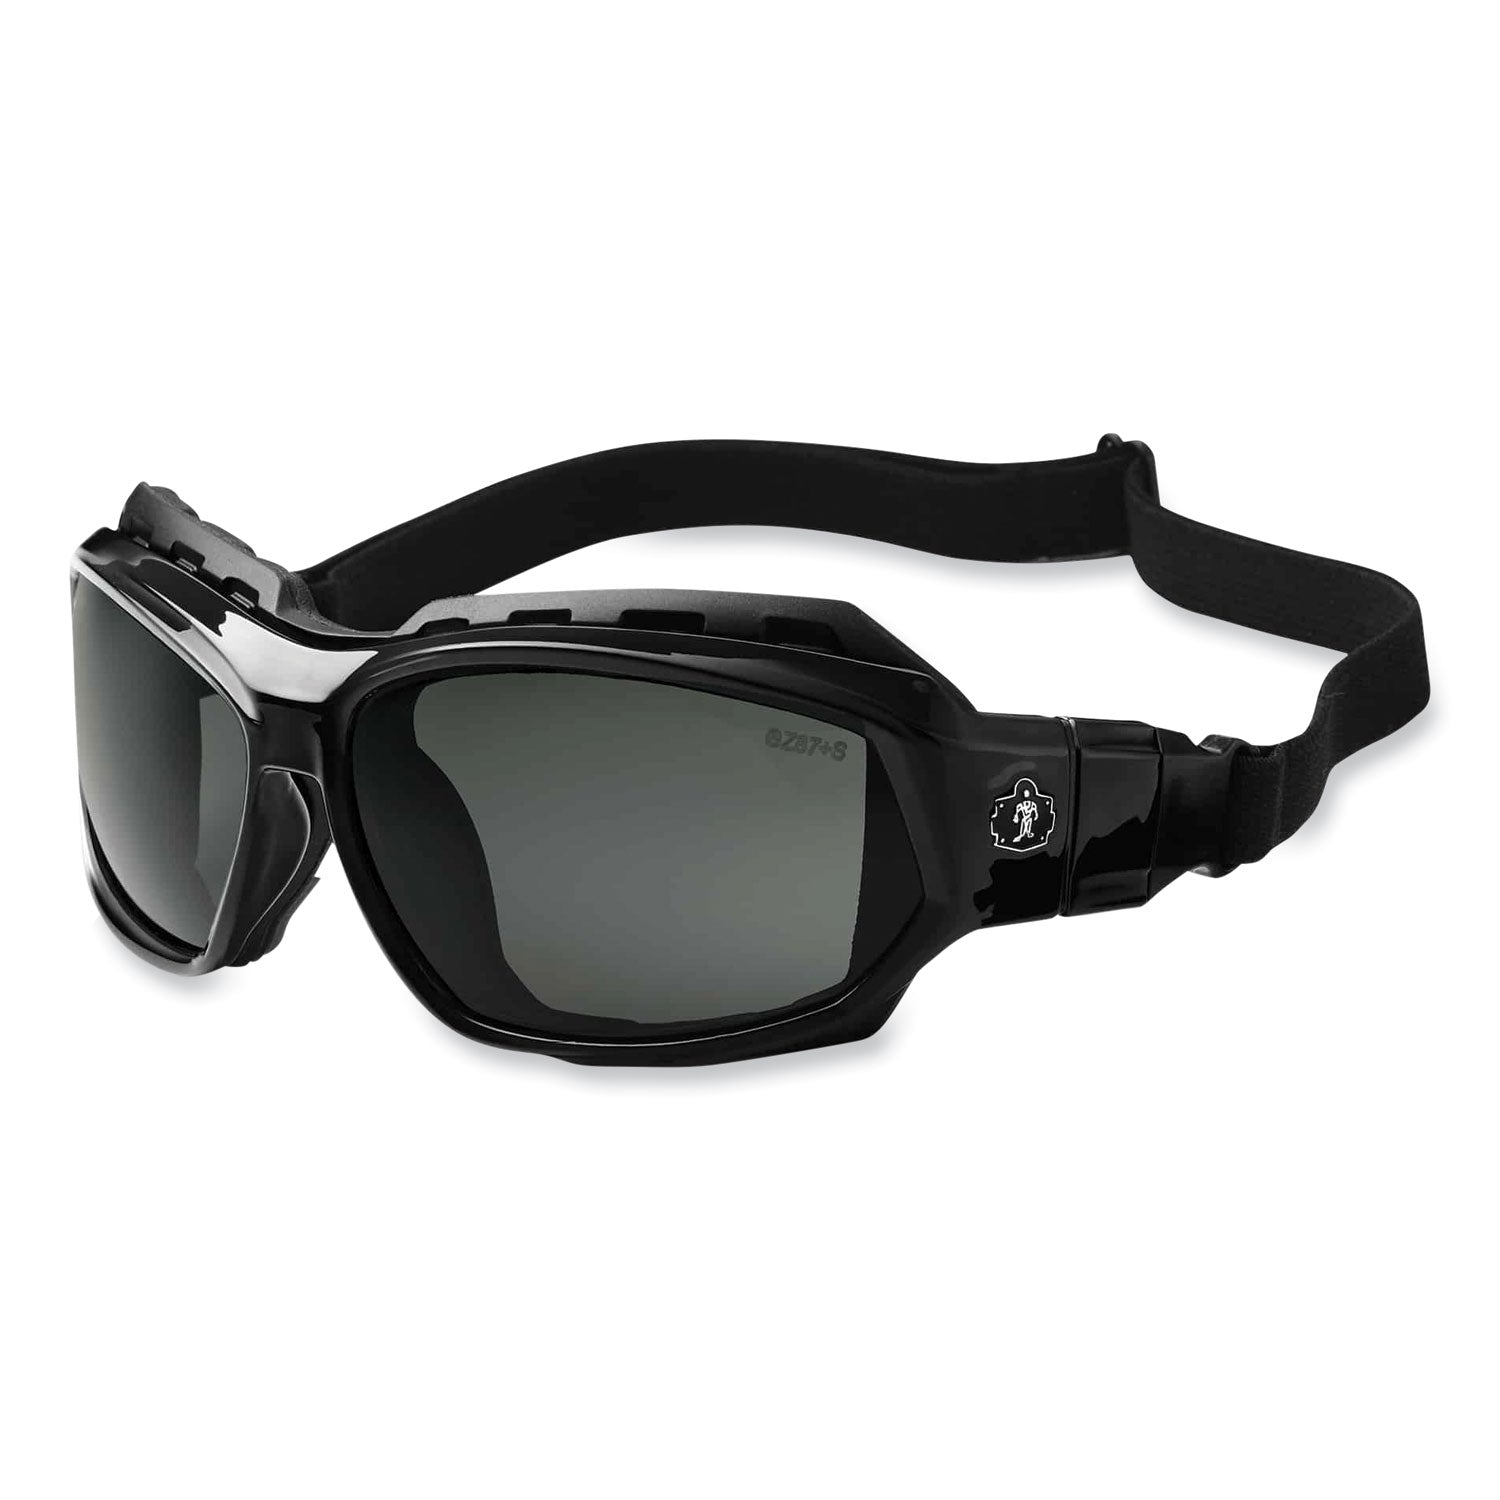 skullerz-loki-safety-glasses-goggles-black-nylon-impact-framepolarized-smoke-polycarbonate-lens-ships-in-1-3-business-days_ego56031 - 3